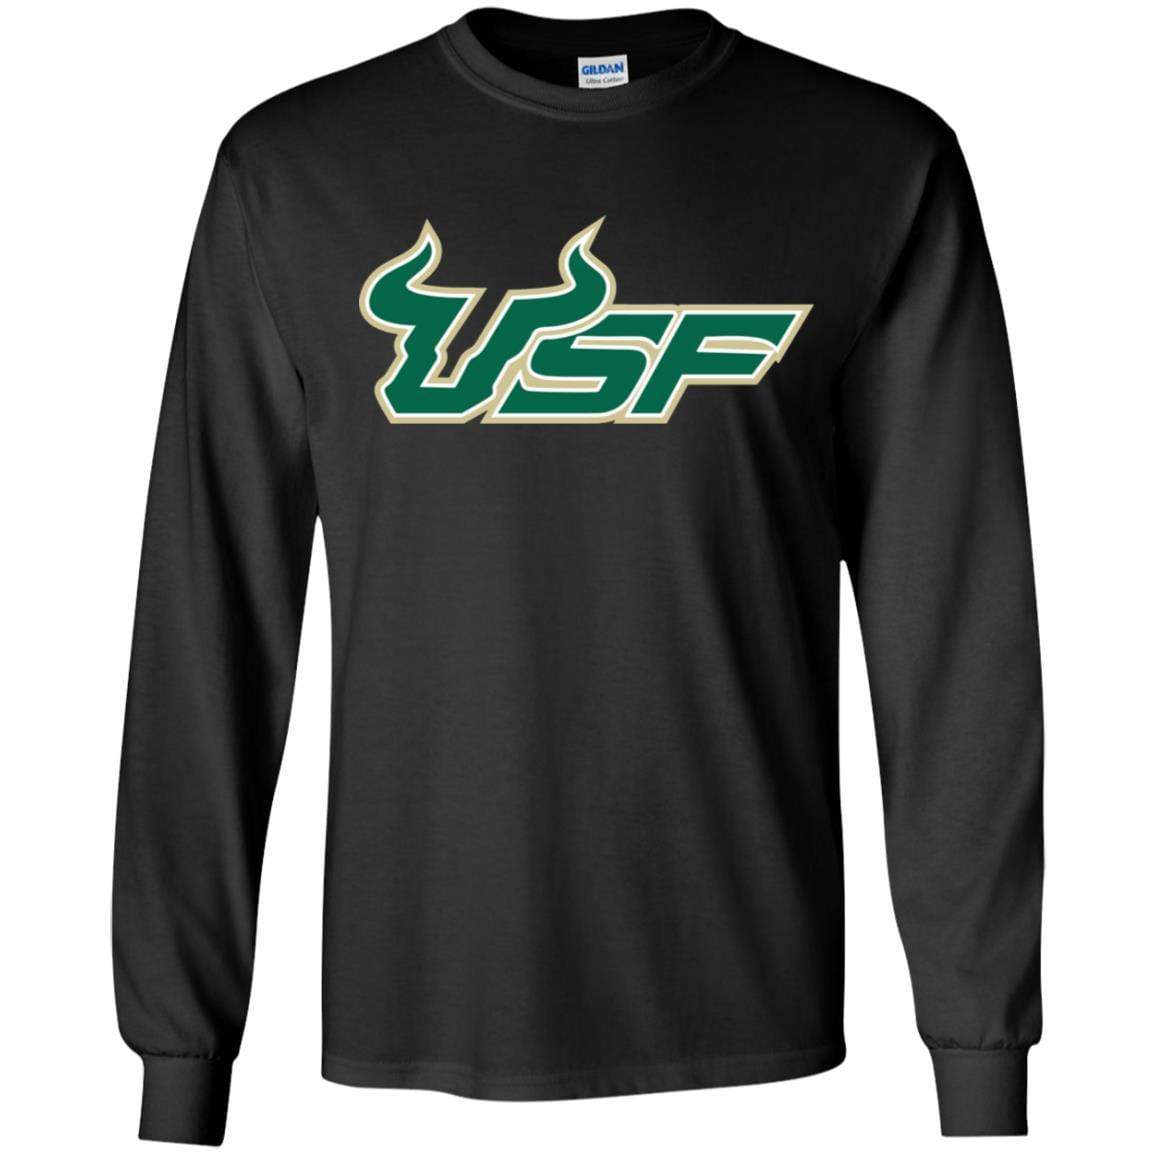 USF Women's Lacrosse Youth Long Sleeve T-Shirt Signature Lacrosse